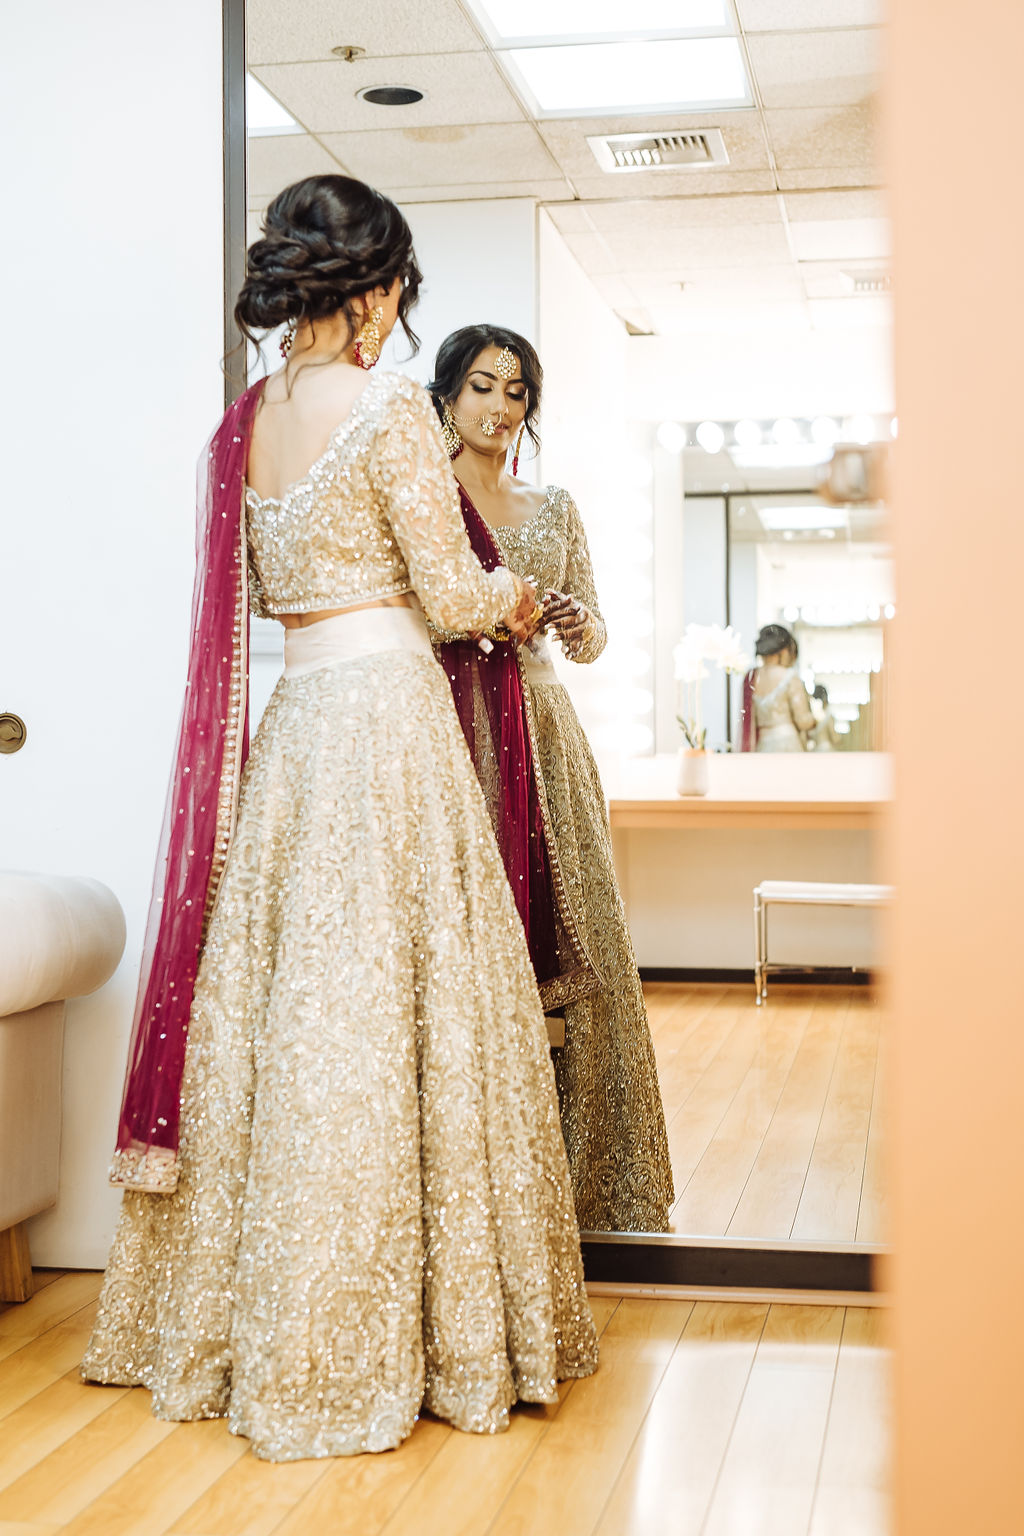 bride wearing embellished golden wedding saree puts on jewelry before wedding